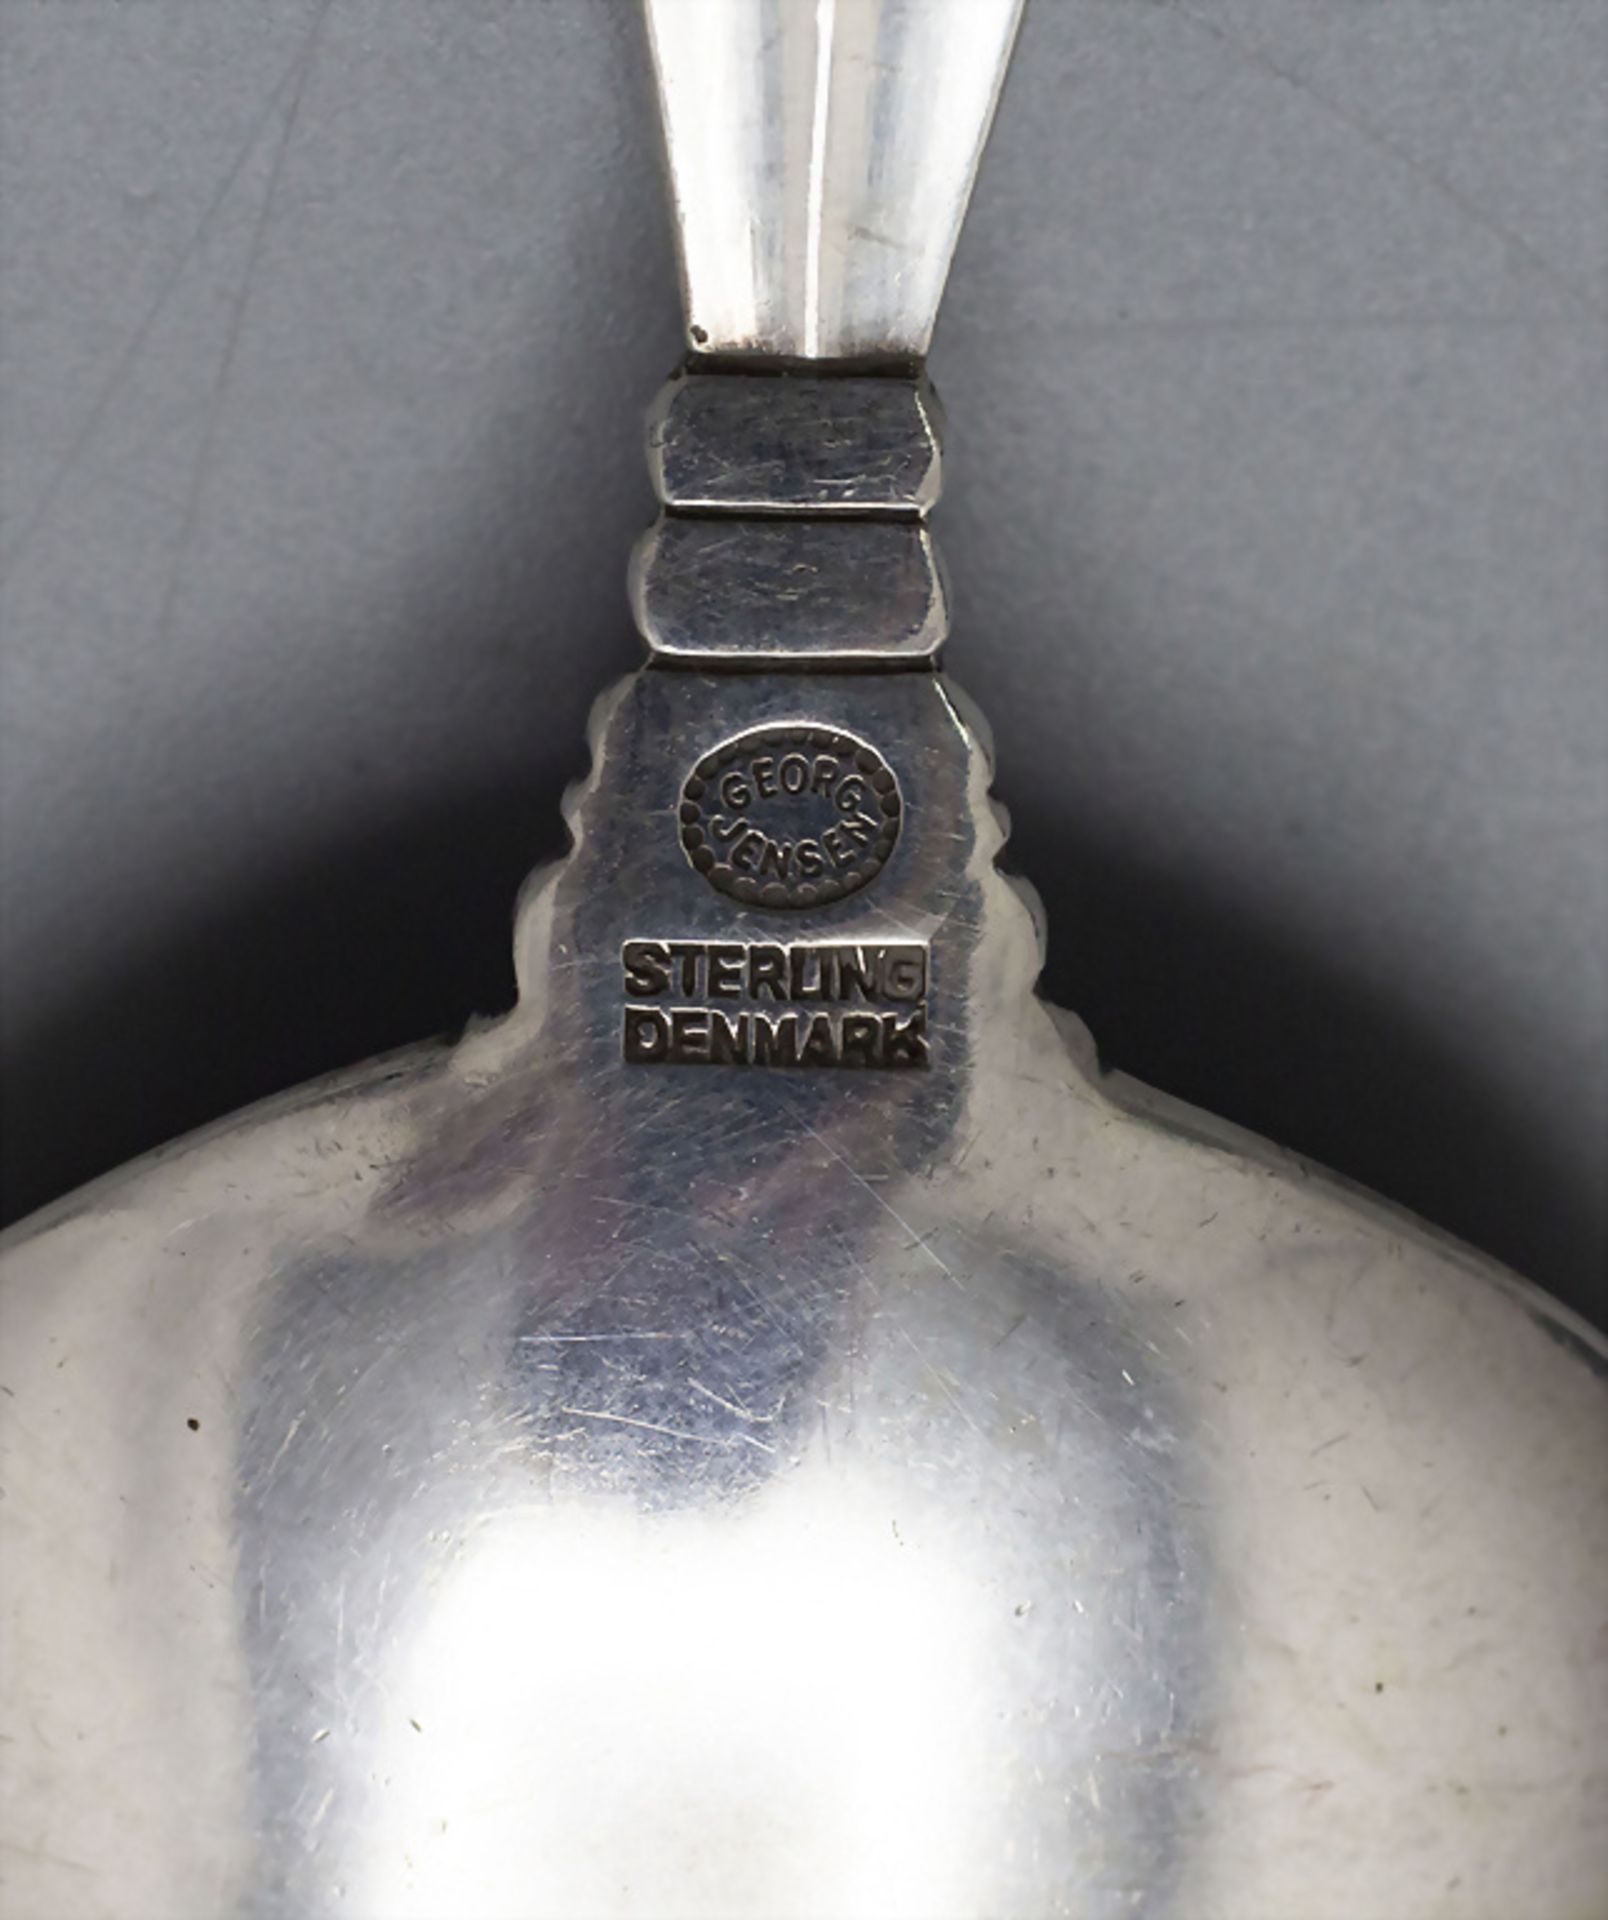 Zuckerlöffel 'Acanthus / Königin / Dronning' / A Sterling silver sugar spoon 'Acanthus', ... - Image 3 of 3